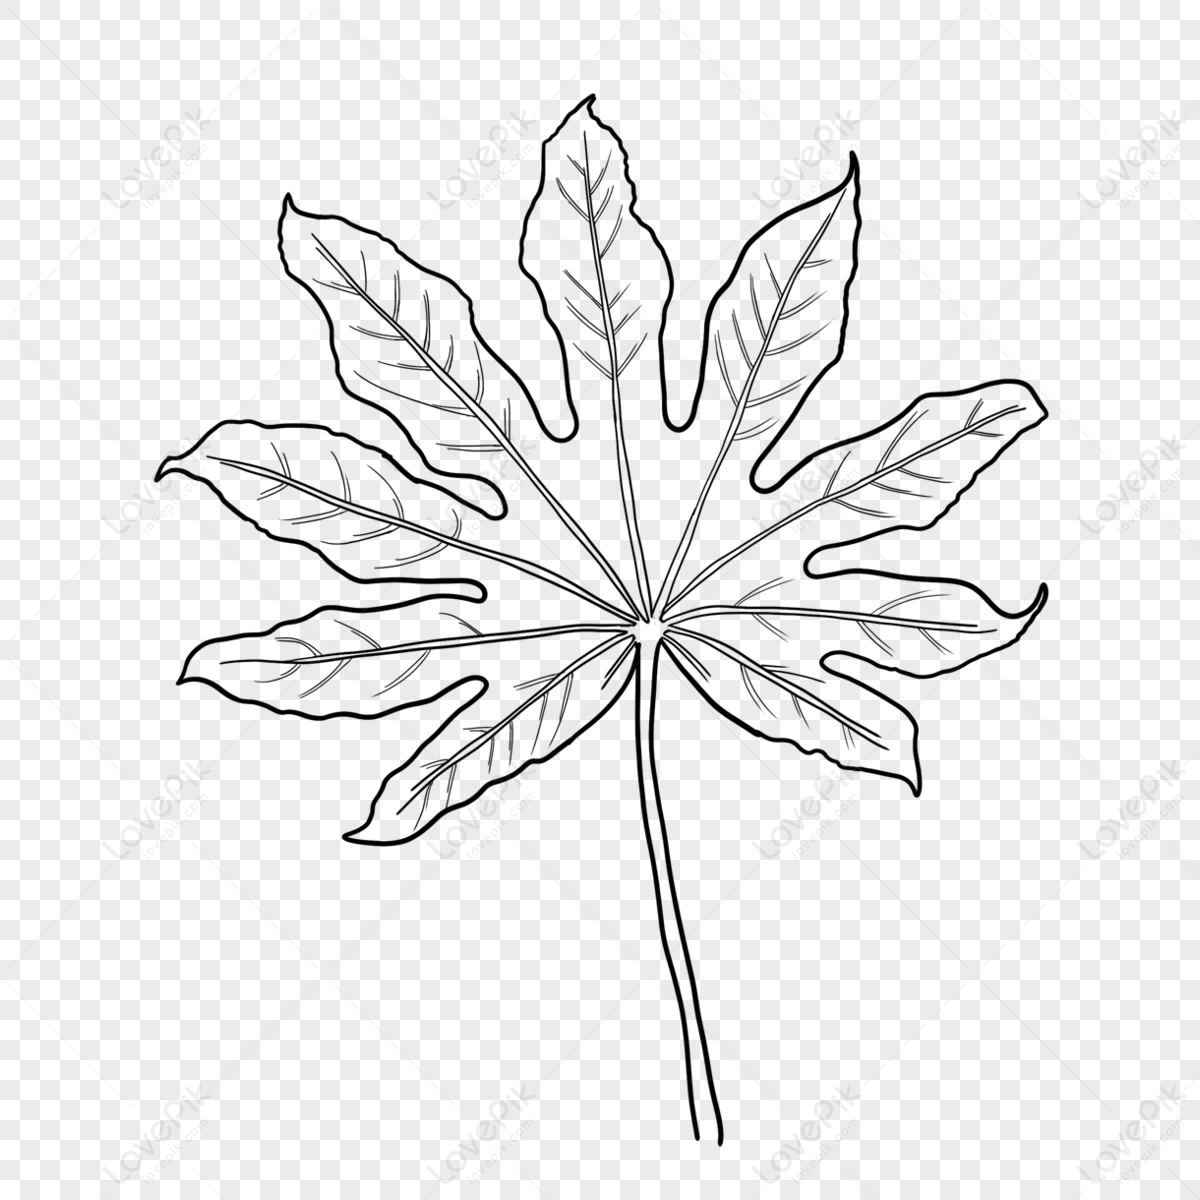 100,000 Papaya leaf Vector Images | Depositphotos